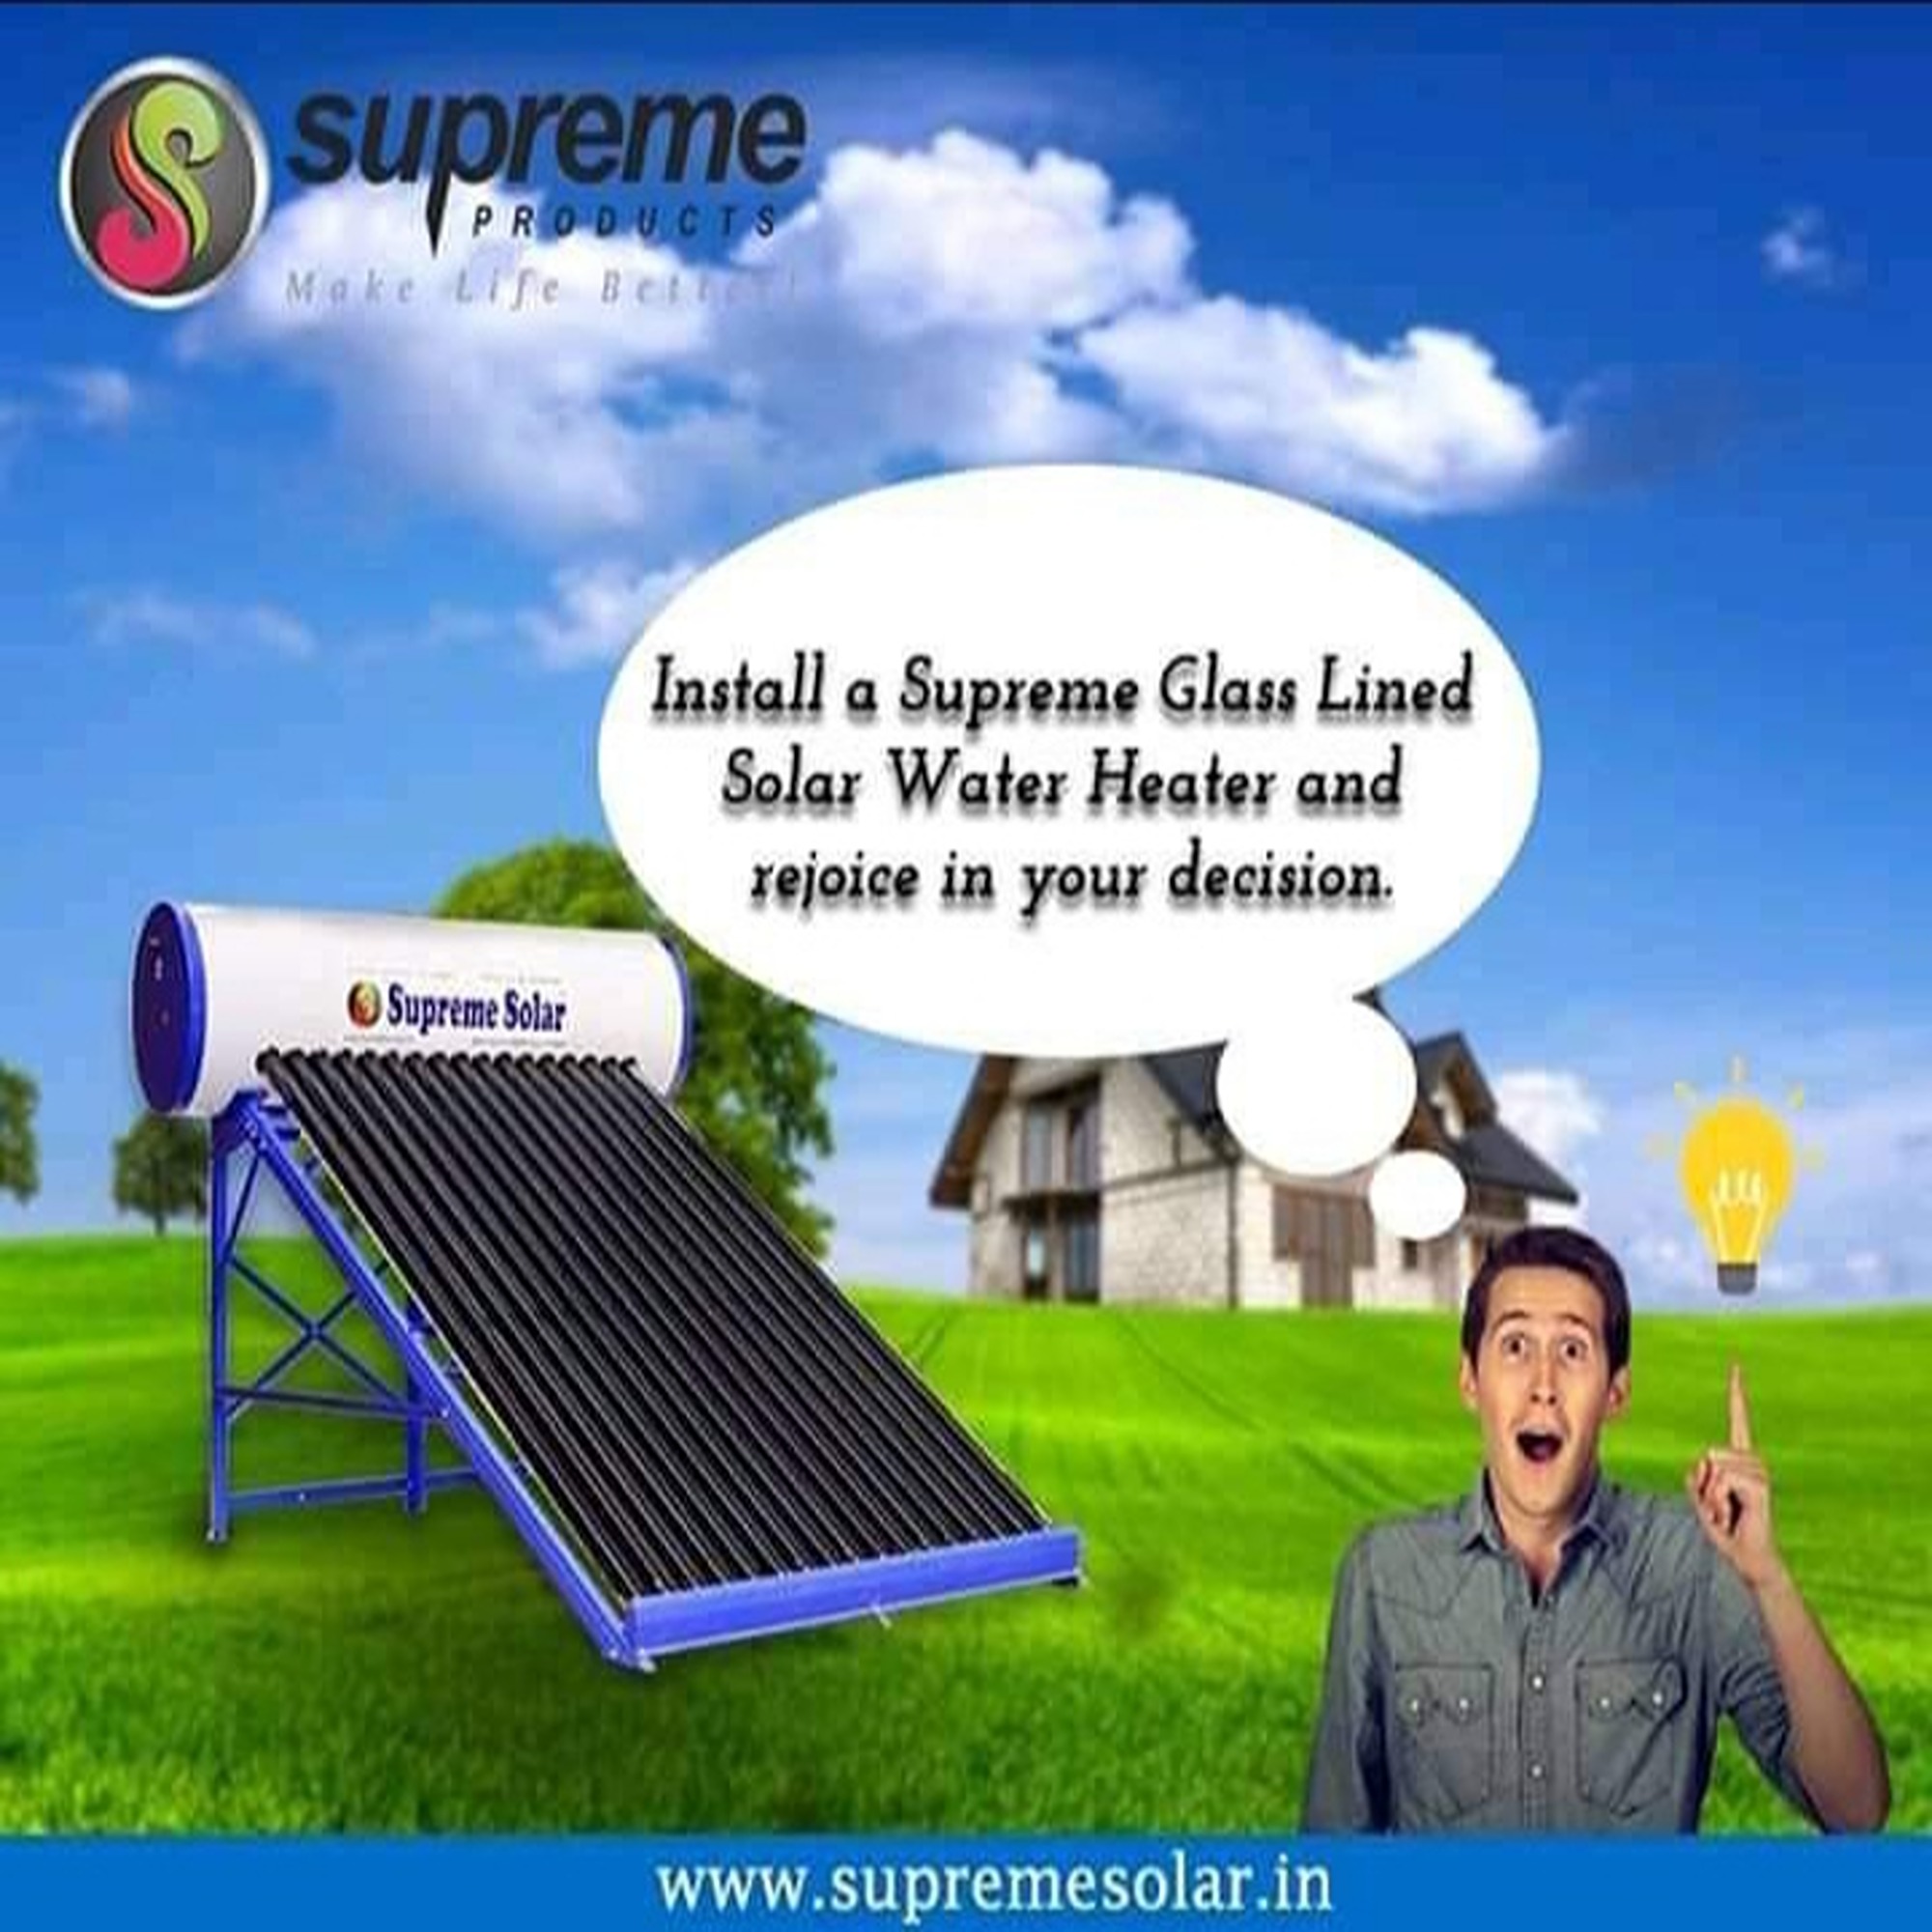 Supreme Solar 165 Ltr GL Water Heater